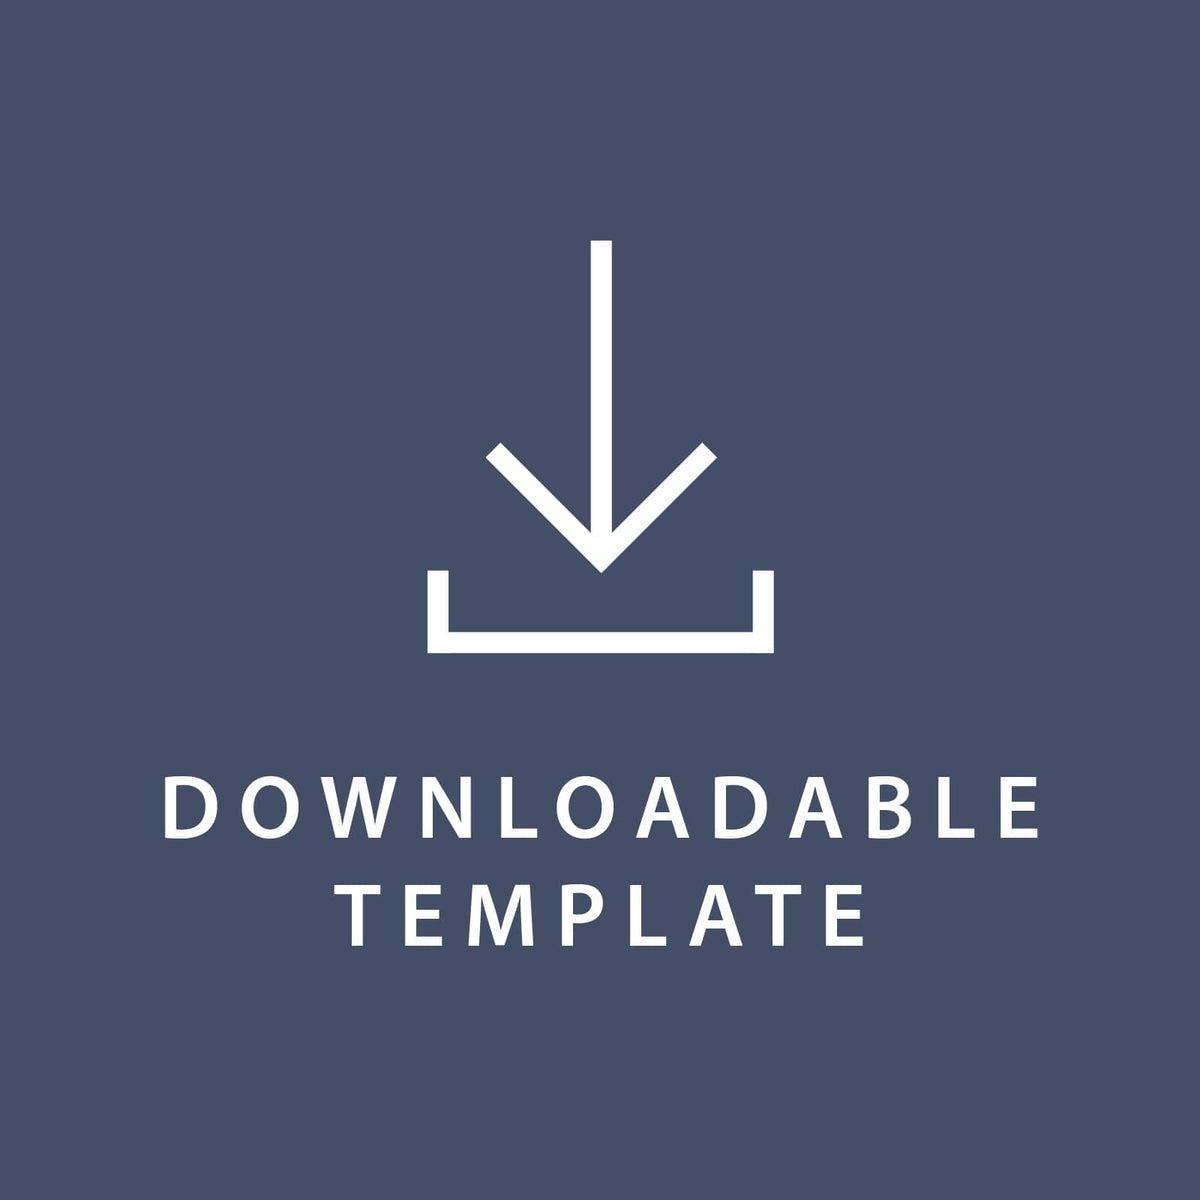 Template for 8.5 x 11 Certificates Gartner Studios Template tmplt0668